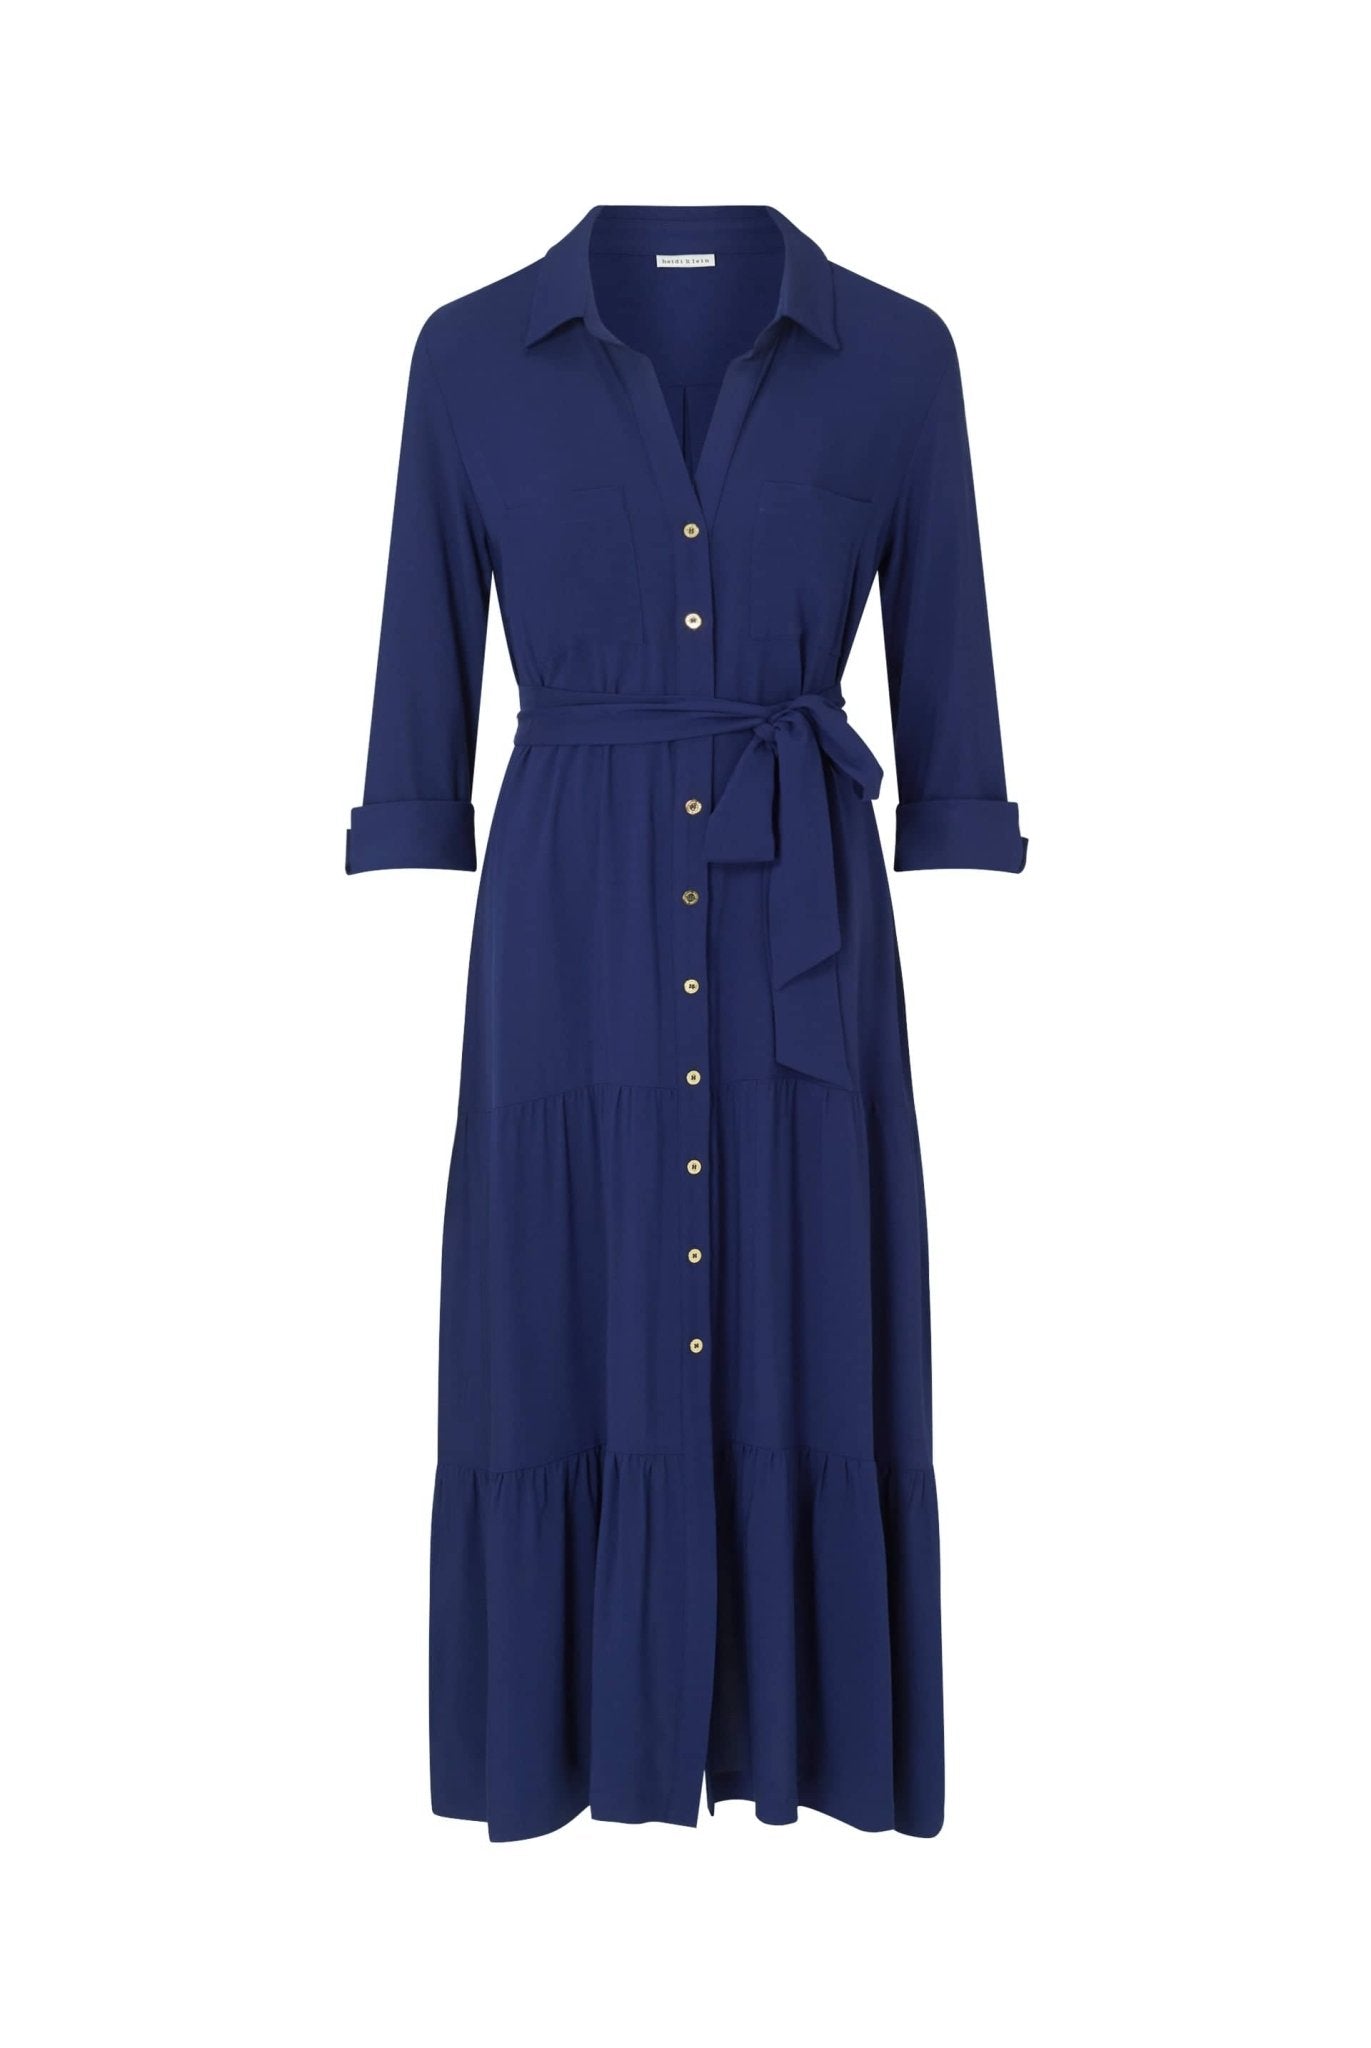 Core Maxi Shirt Dress in Navy - Heidi Klein - UK Store